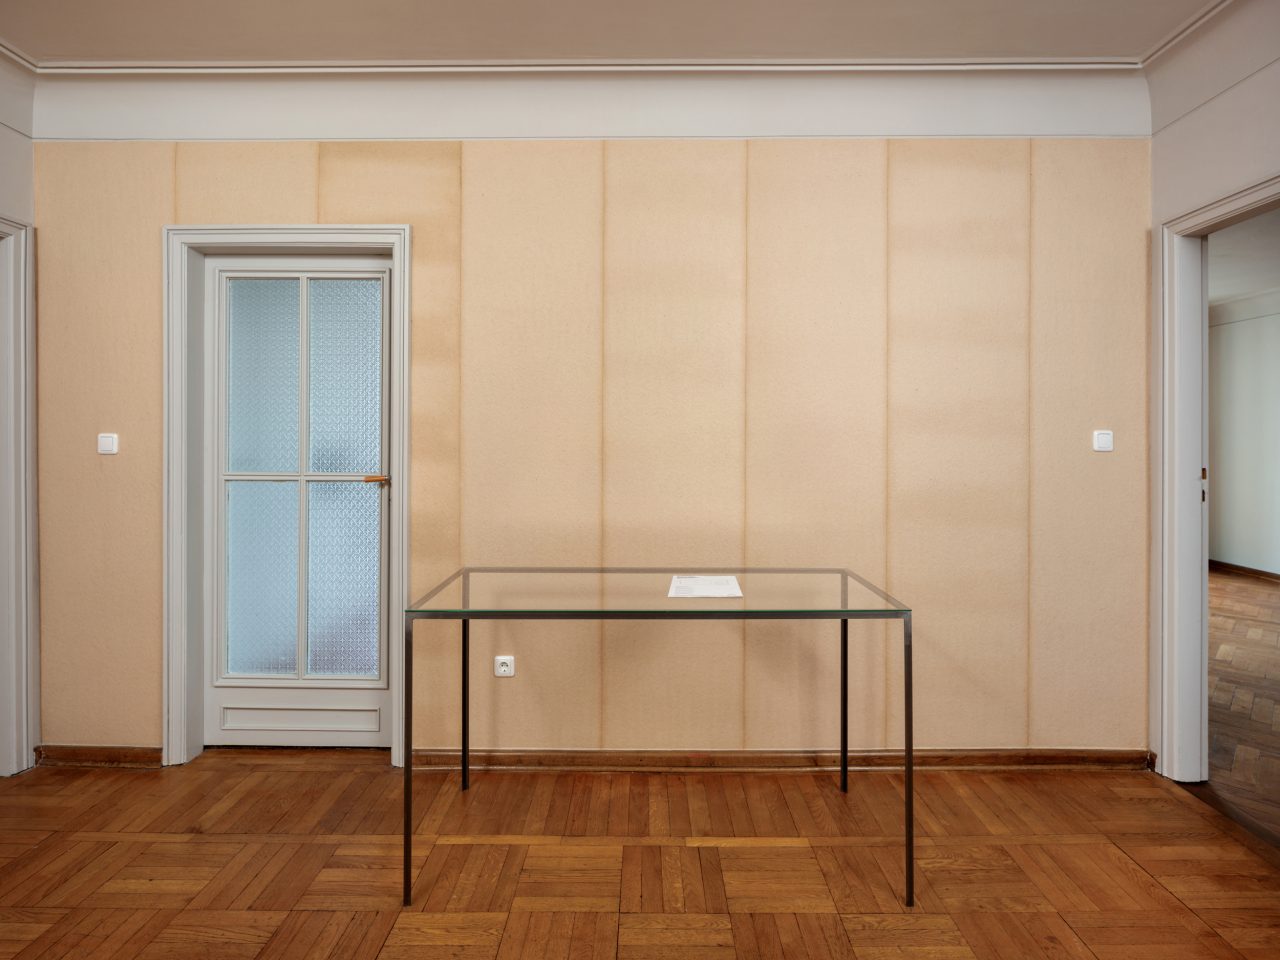 Florence Jung, Mathias Sander Exhibition's Floor Plan (2018)